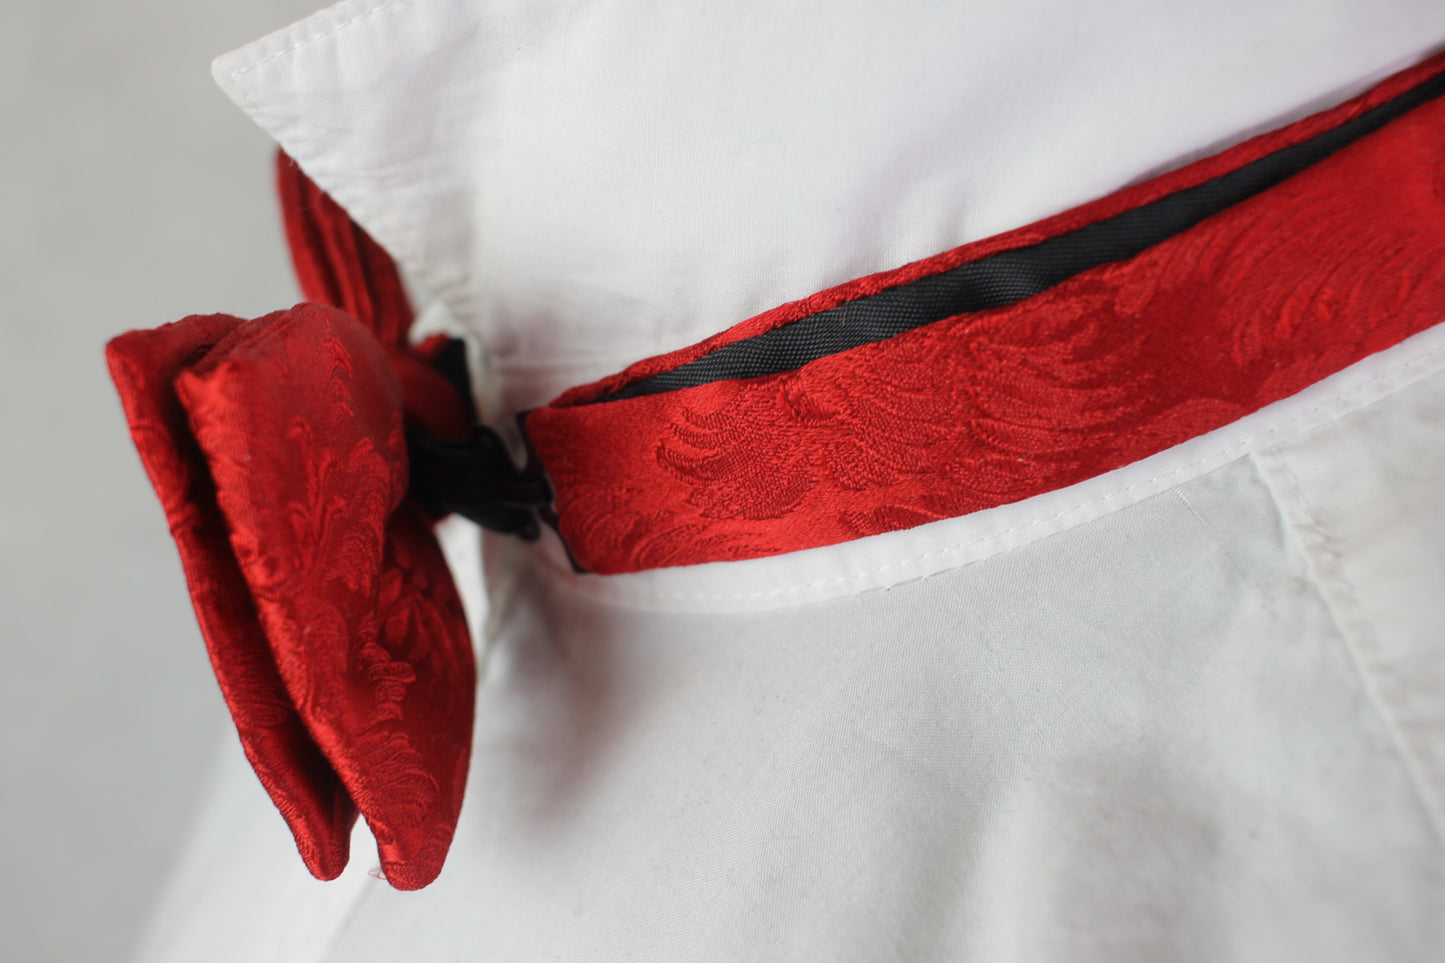 Vintage Frederick Theak pure silk pre-tied red jacquard bow tie adjustable